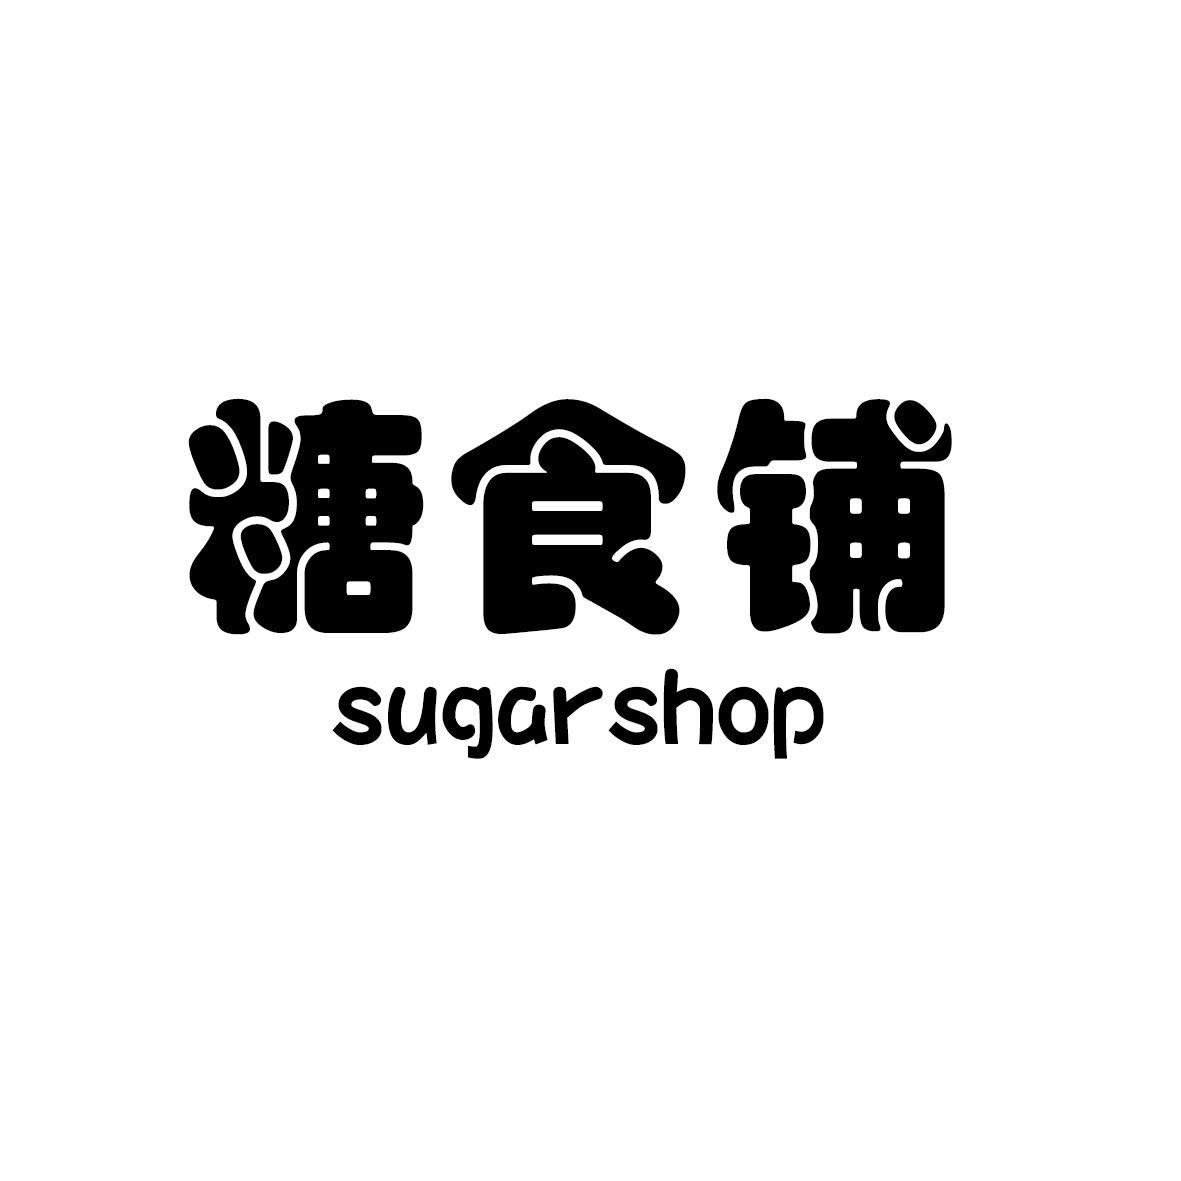 糖食铺 SUGAR SHOP商标转让